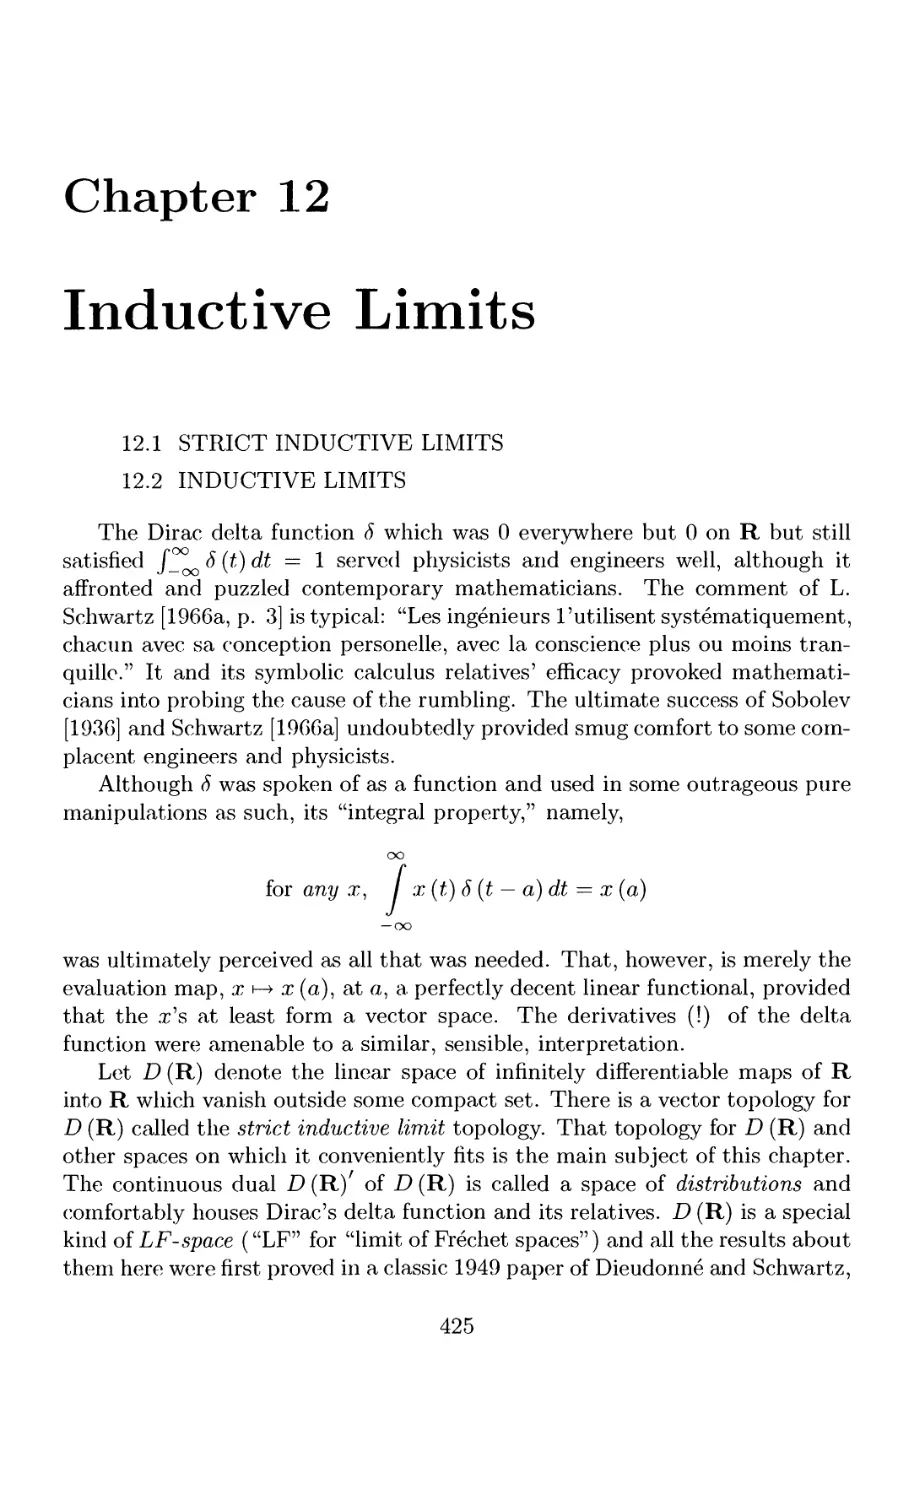 12 Inductive Limits